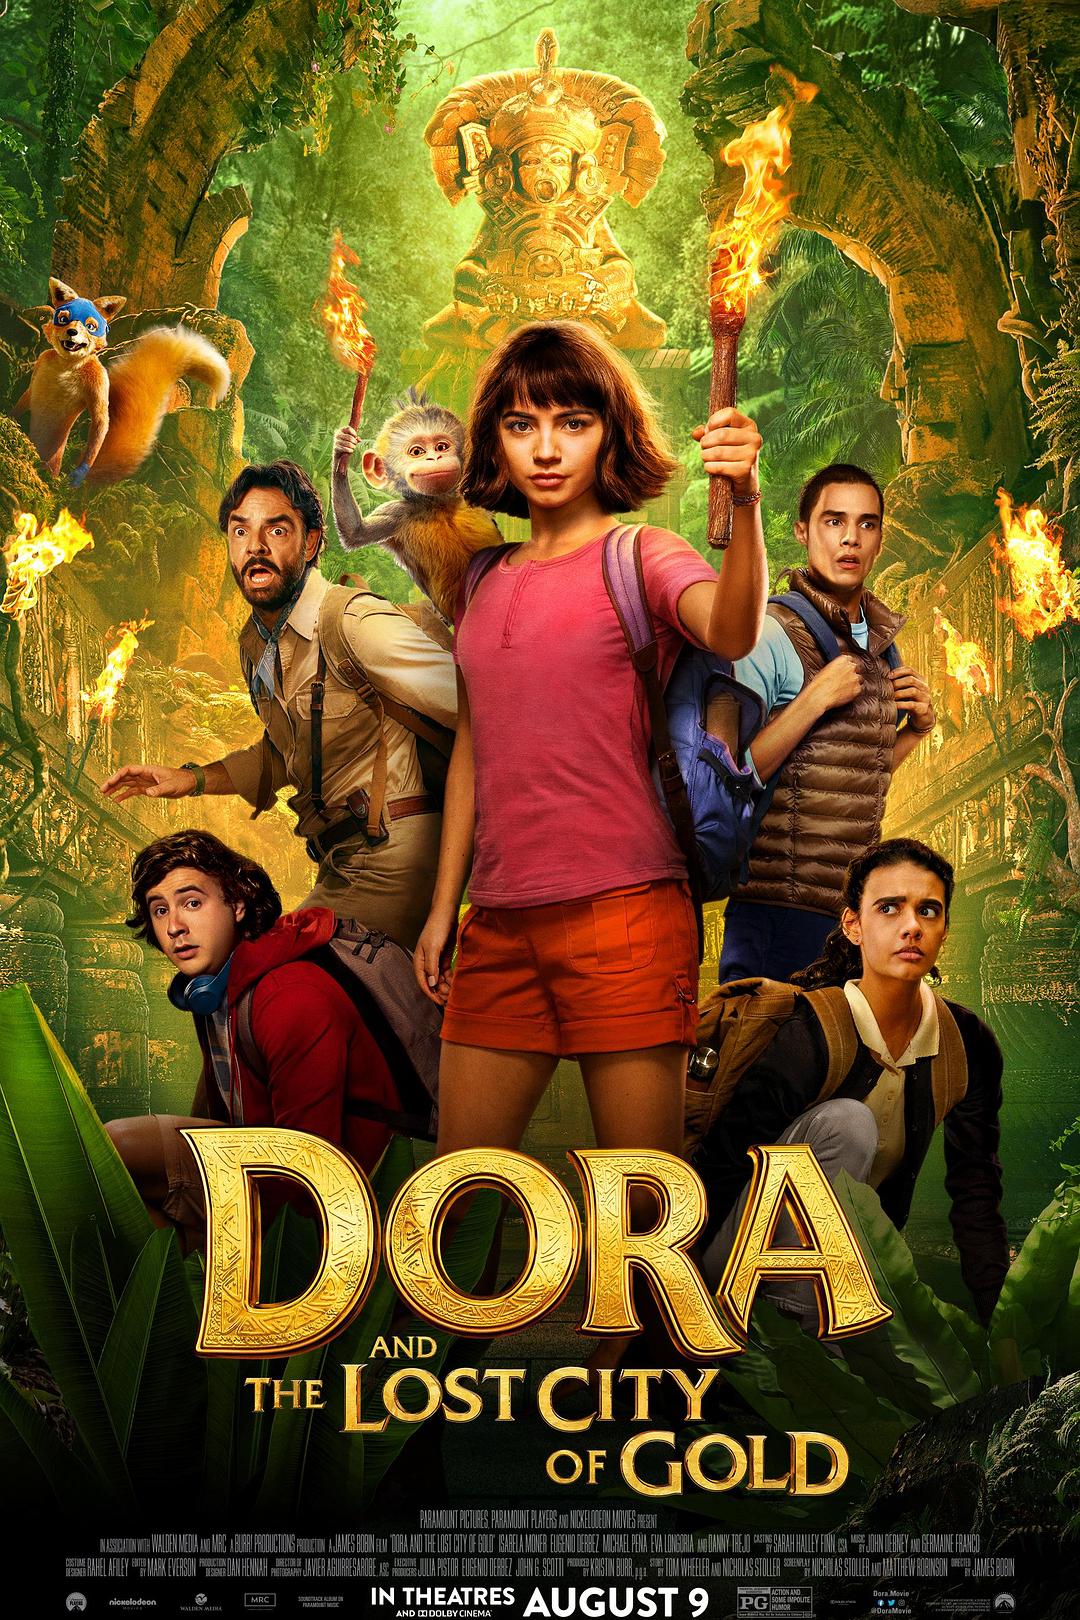 爱探险的朵拉:消失的黄金城 Dora.and.the.Lost.City.of.Gold.2019.720p.BluRay.x264-DRONES 4.38GB-1.png